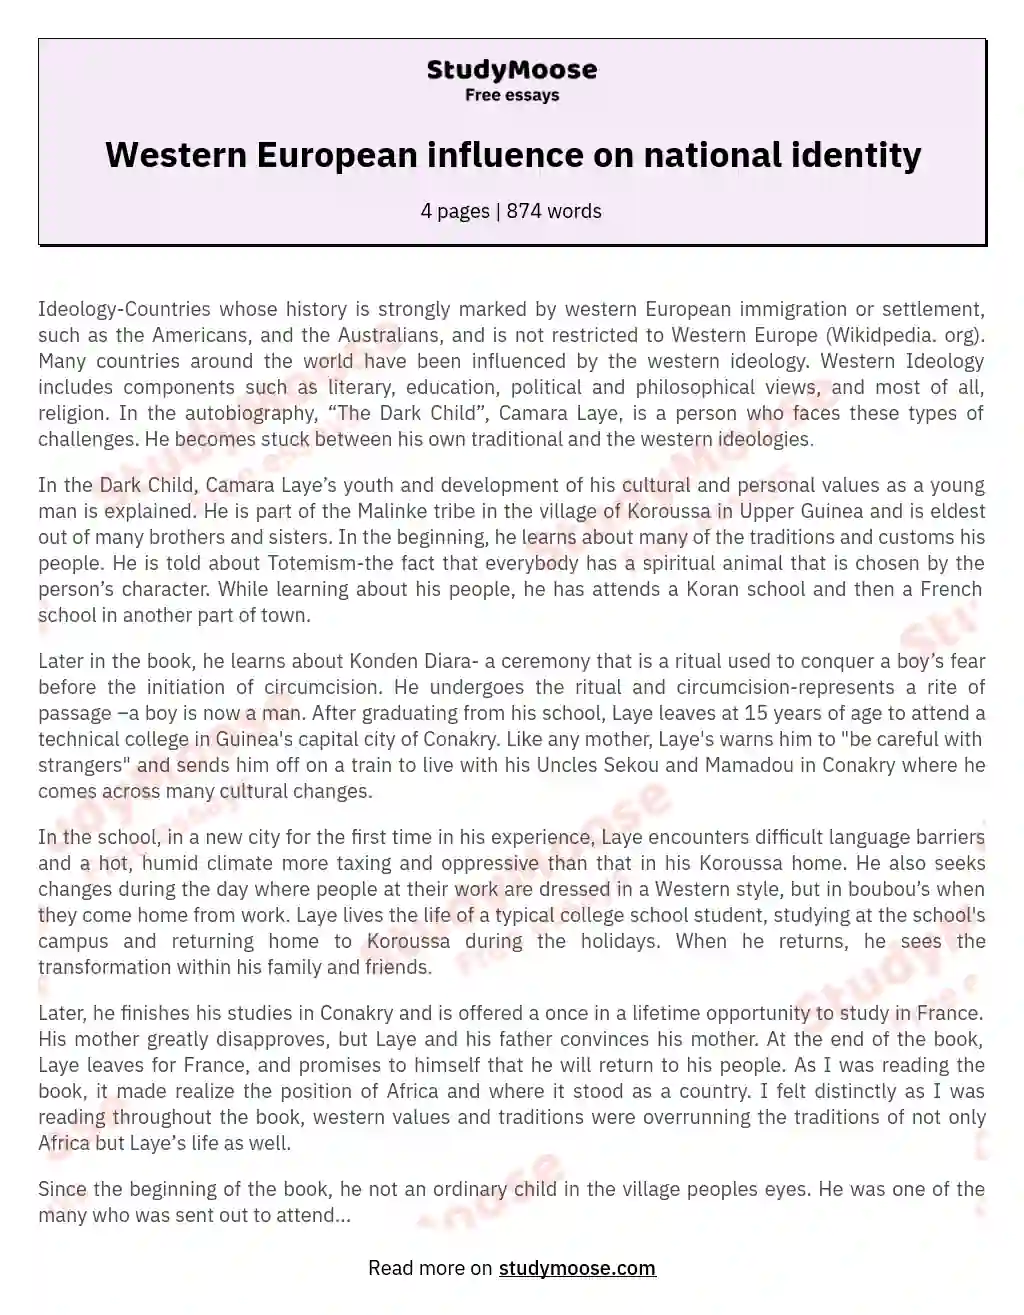 Western European influence on national identity essay